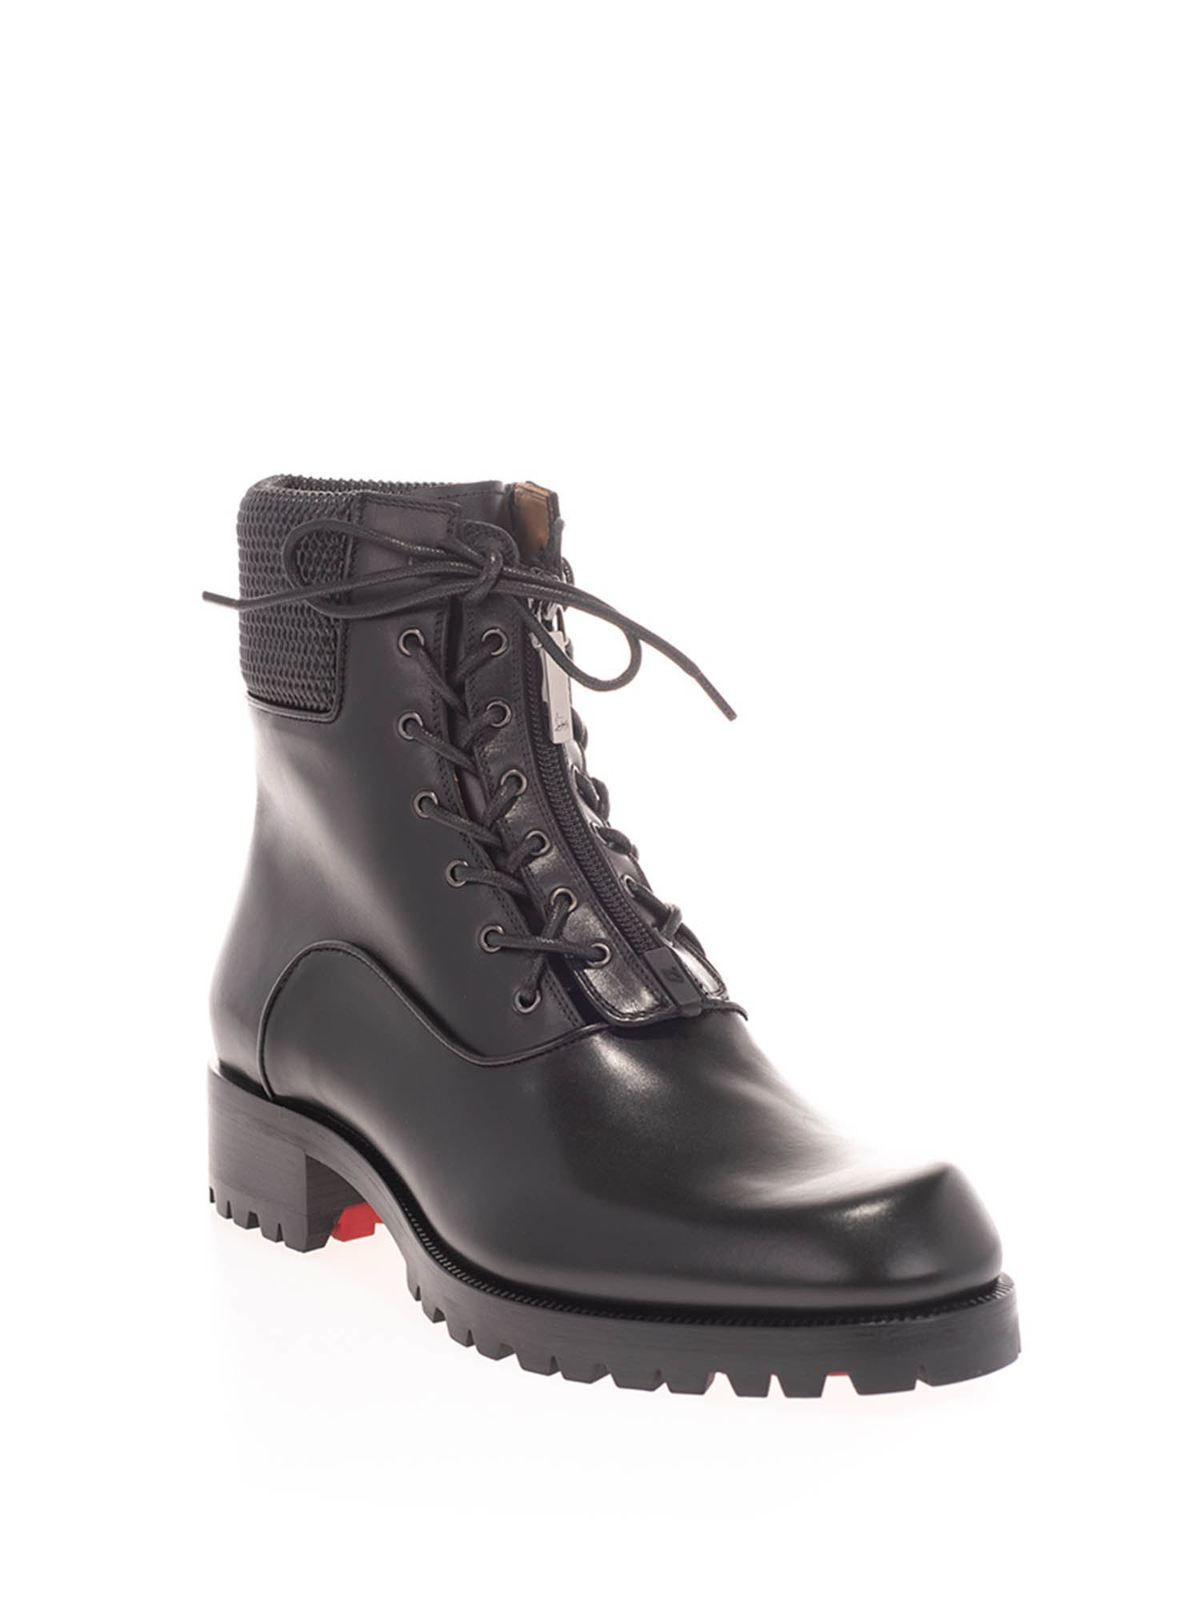 black ankle boots online